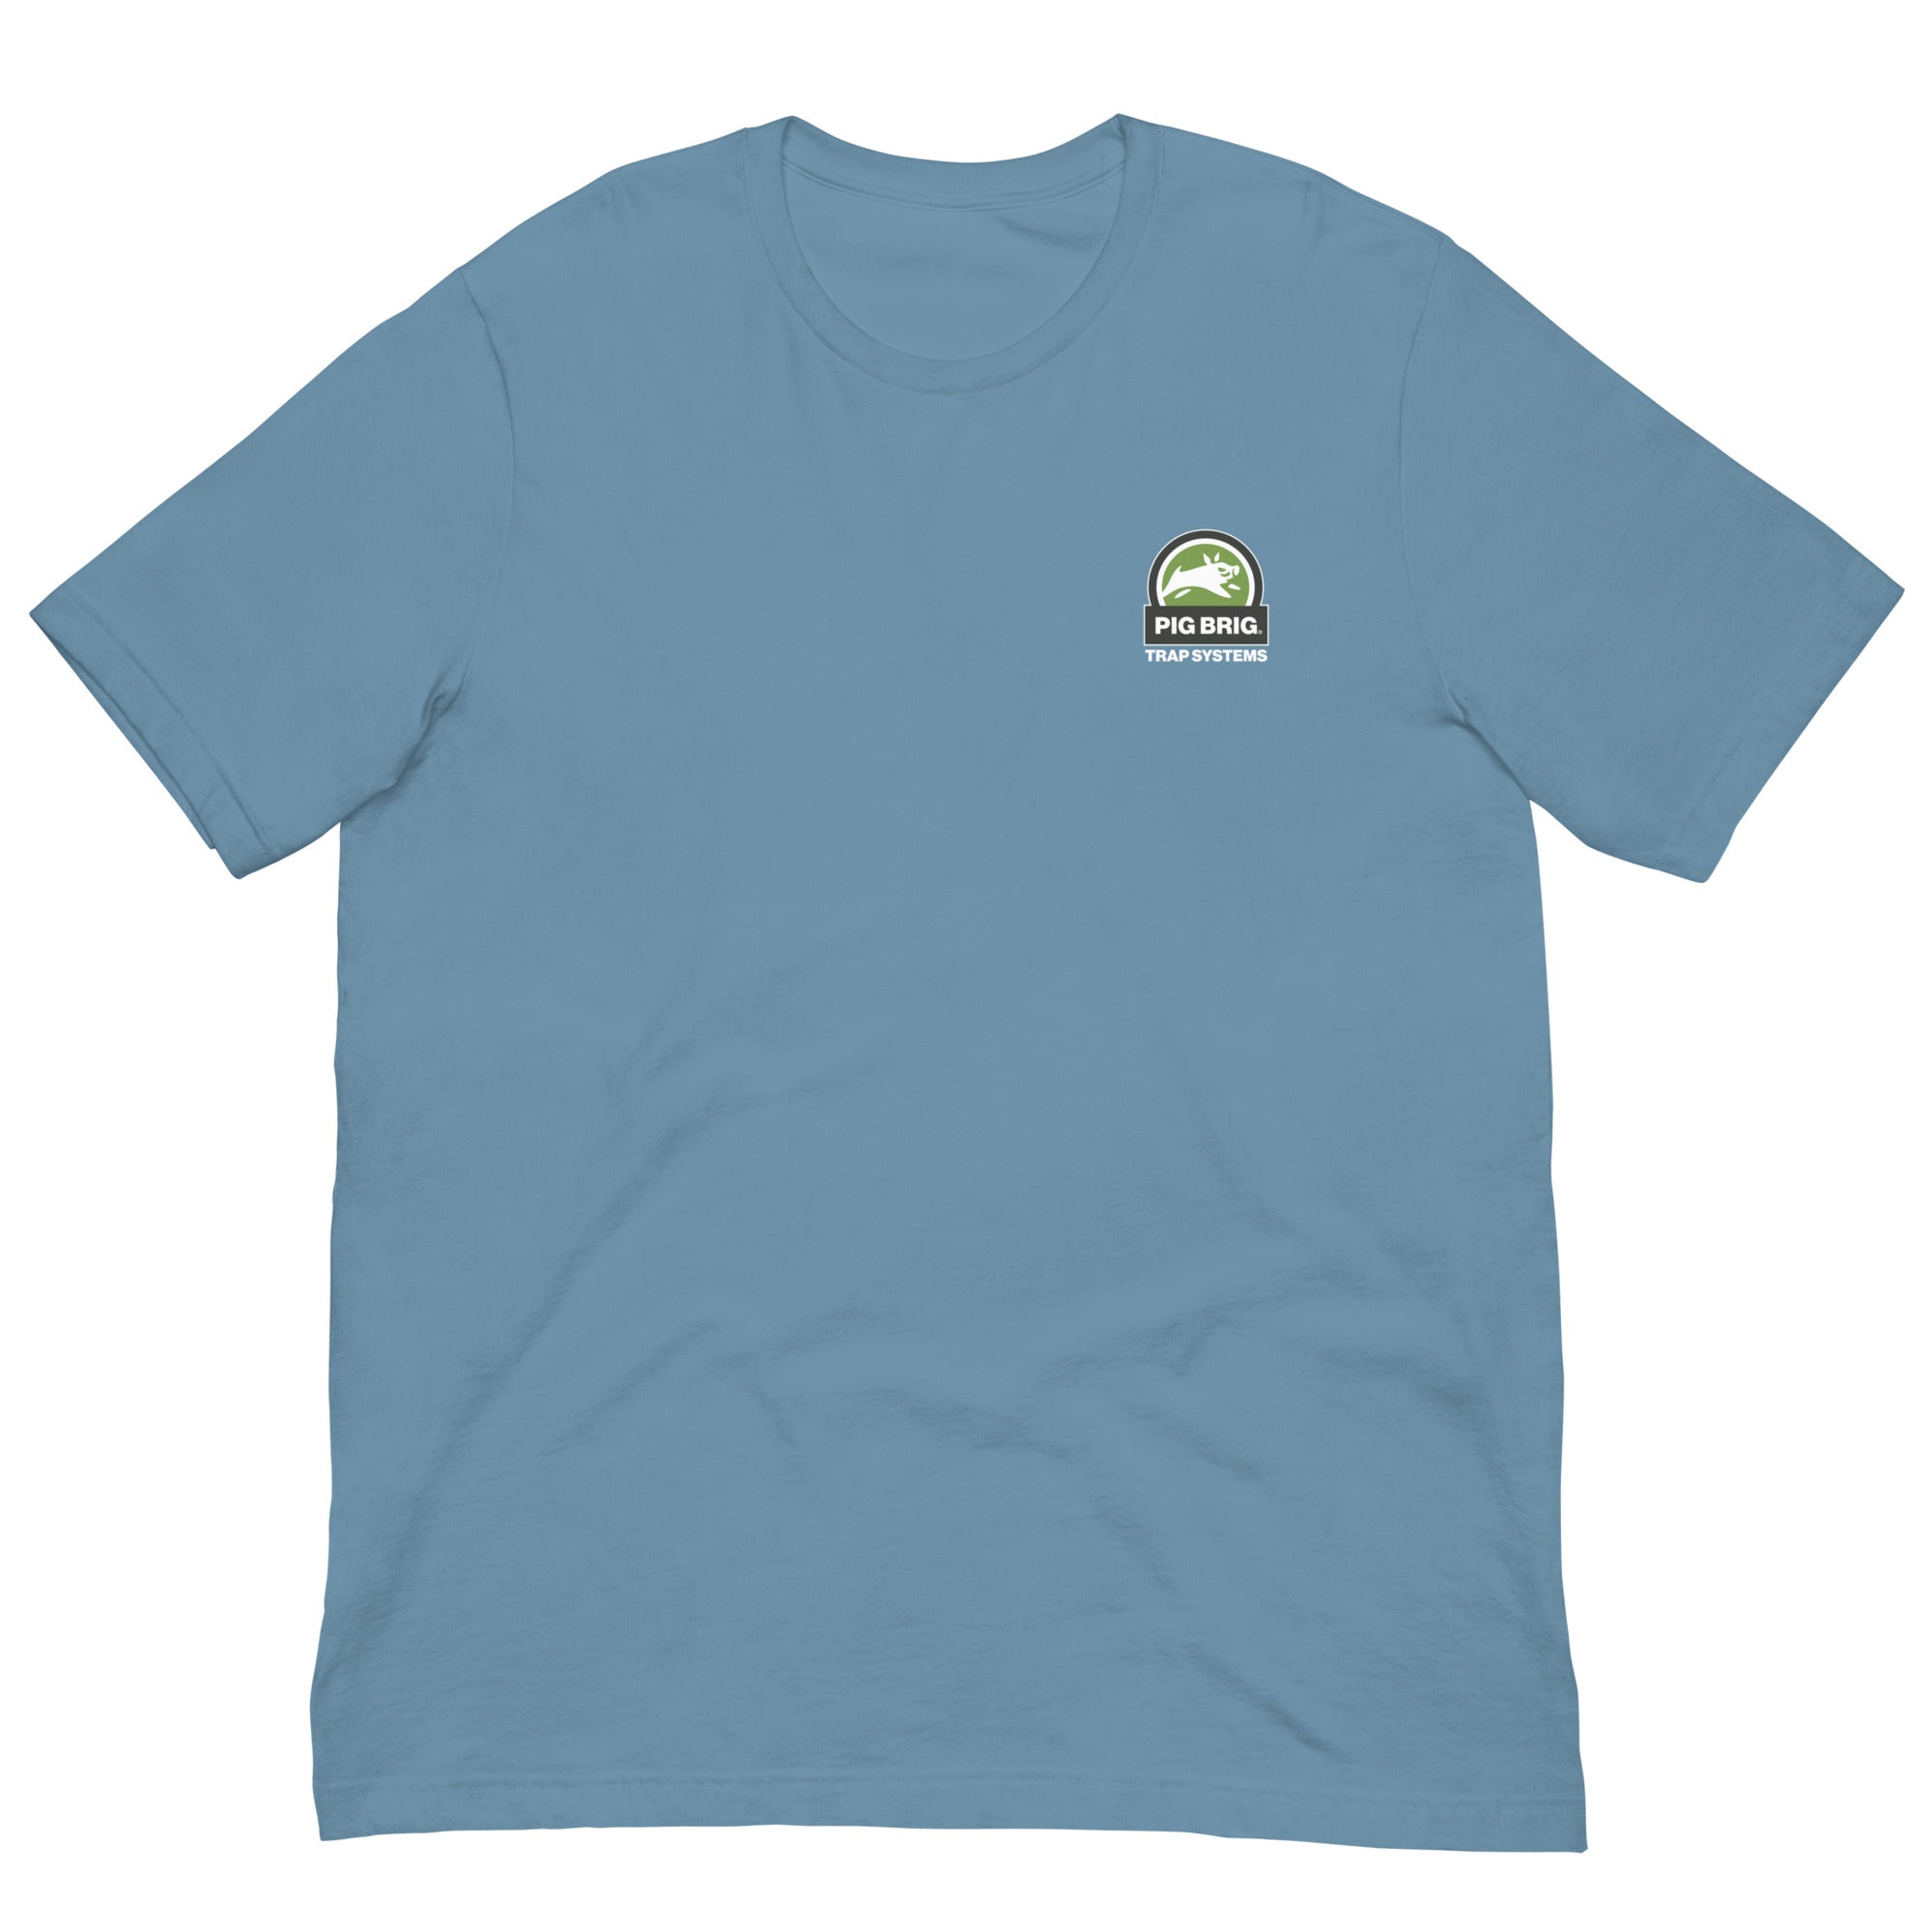 It's Hoggin' Time. - Short-Sleeve Unisex T-Shirt